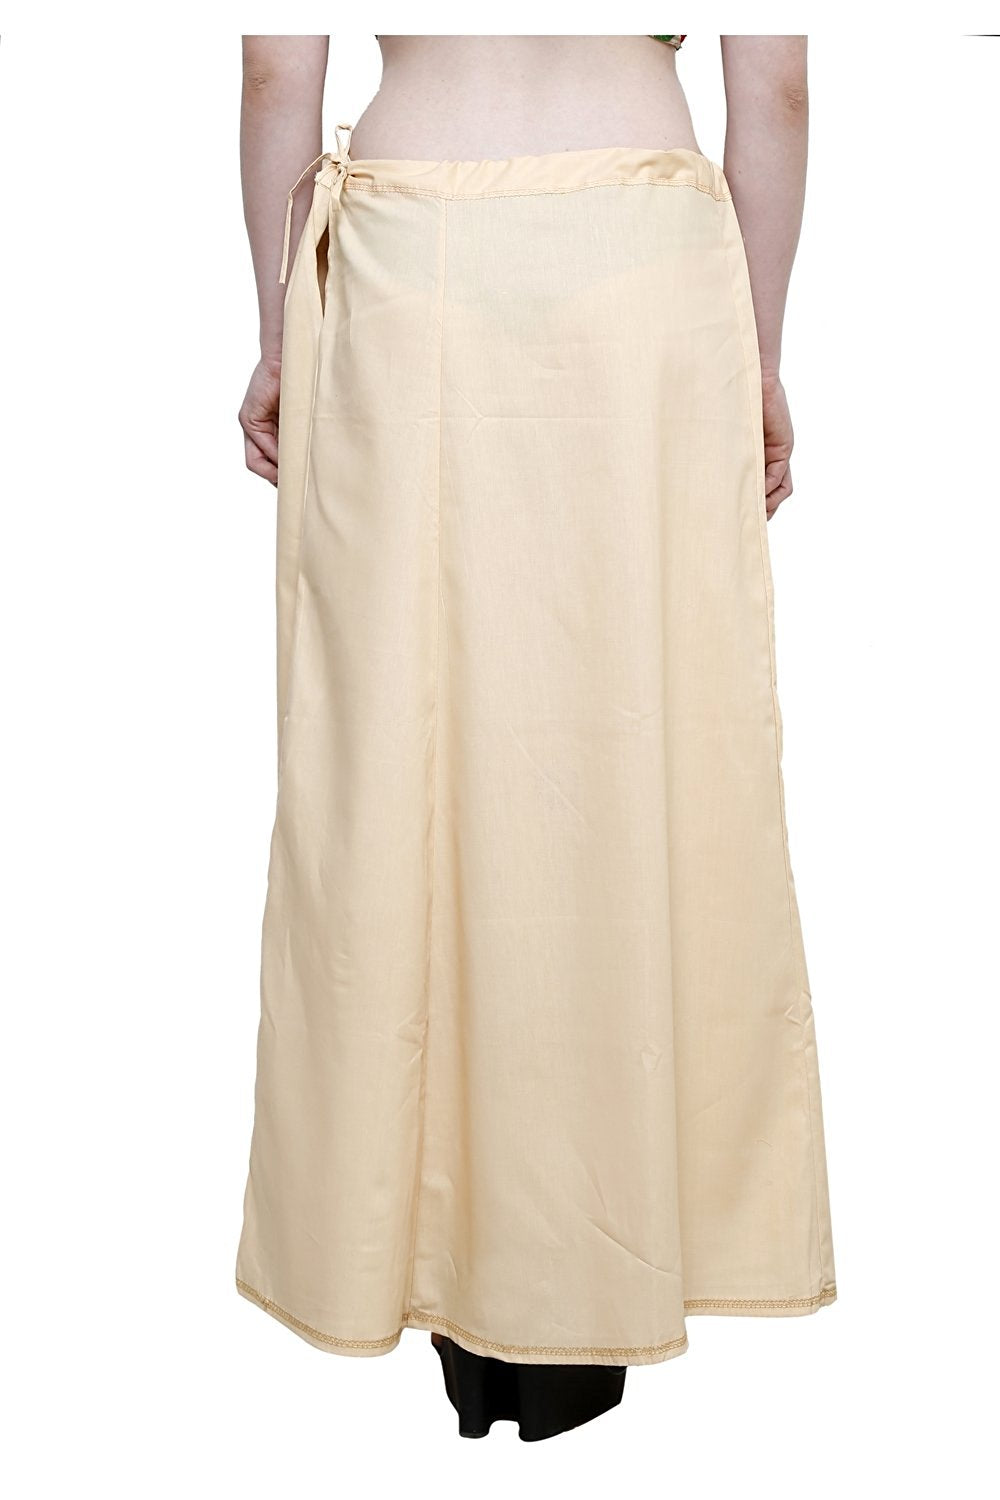 Stylesindia Women's Cotton Readymade Indian Inskirt Saree petticoats Underskirt - Free Size-LigheBeige